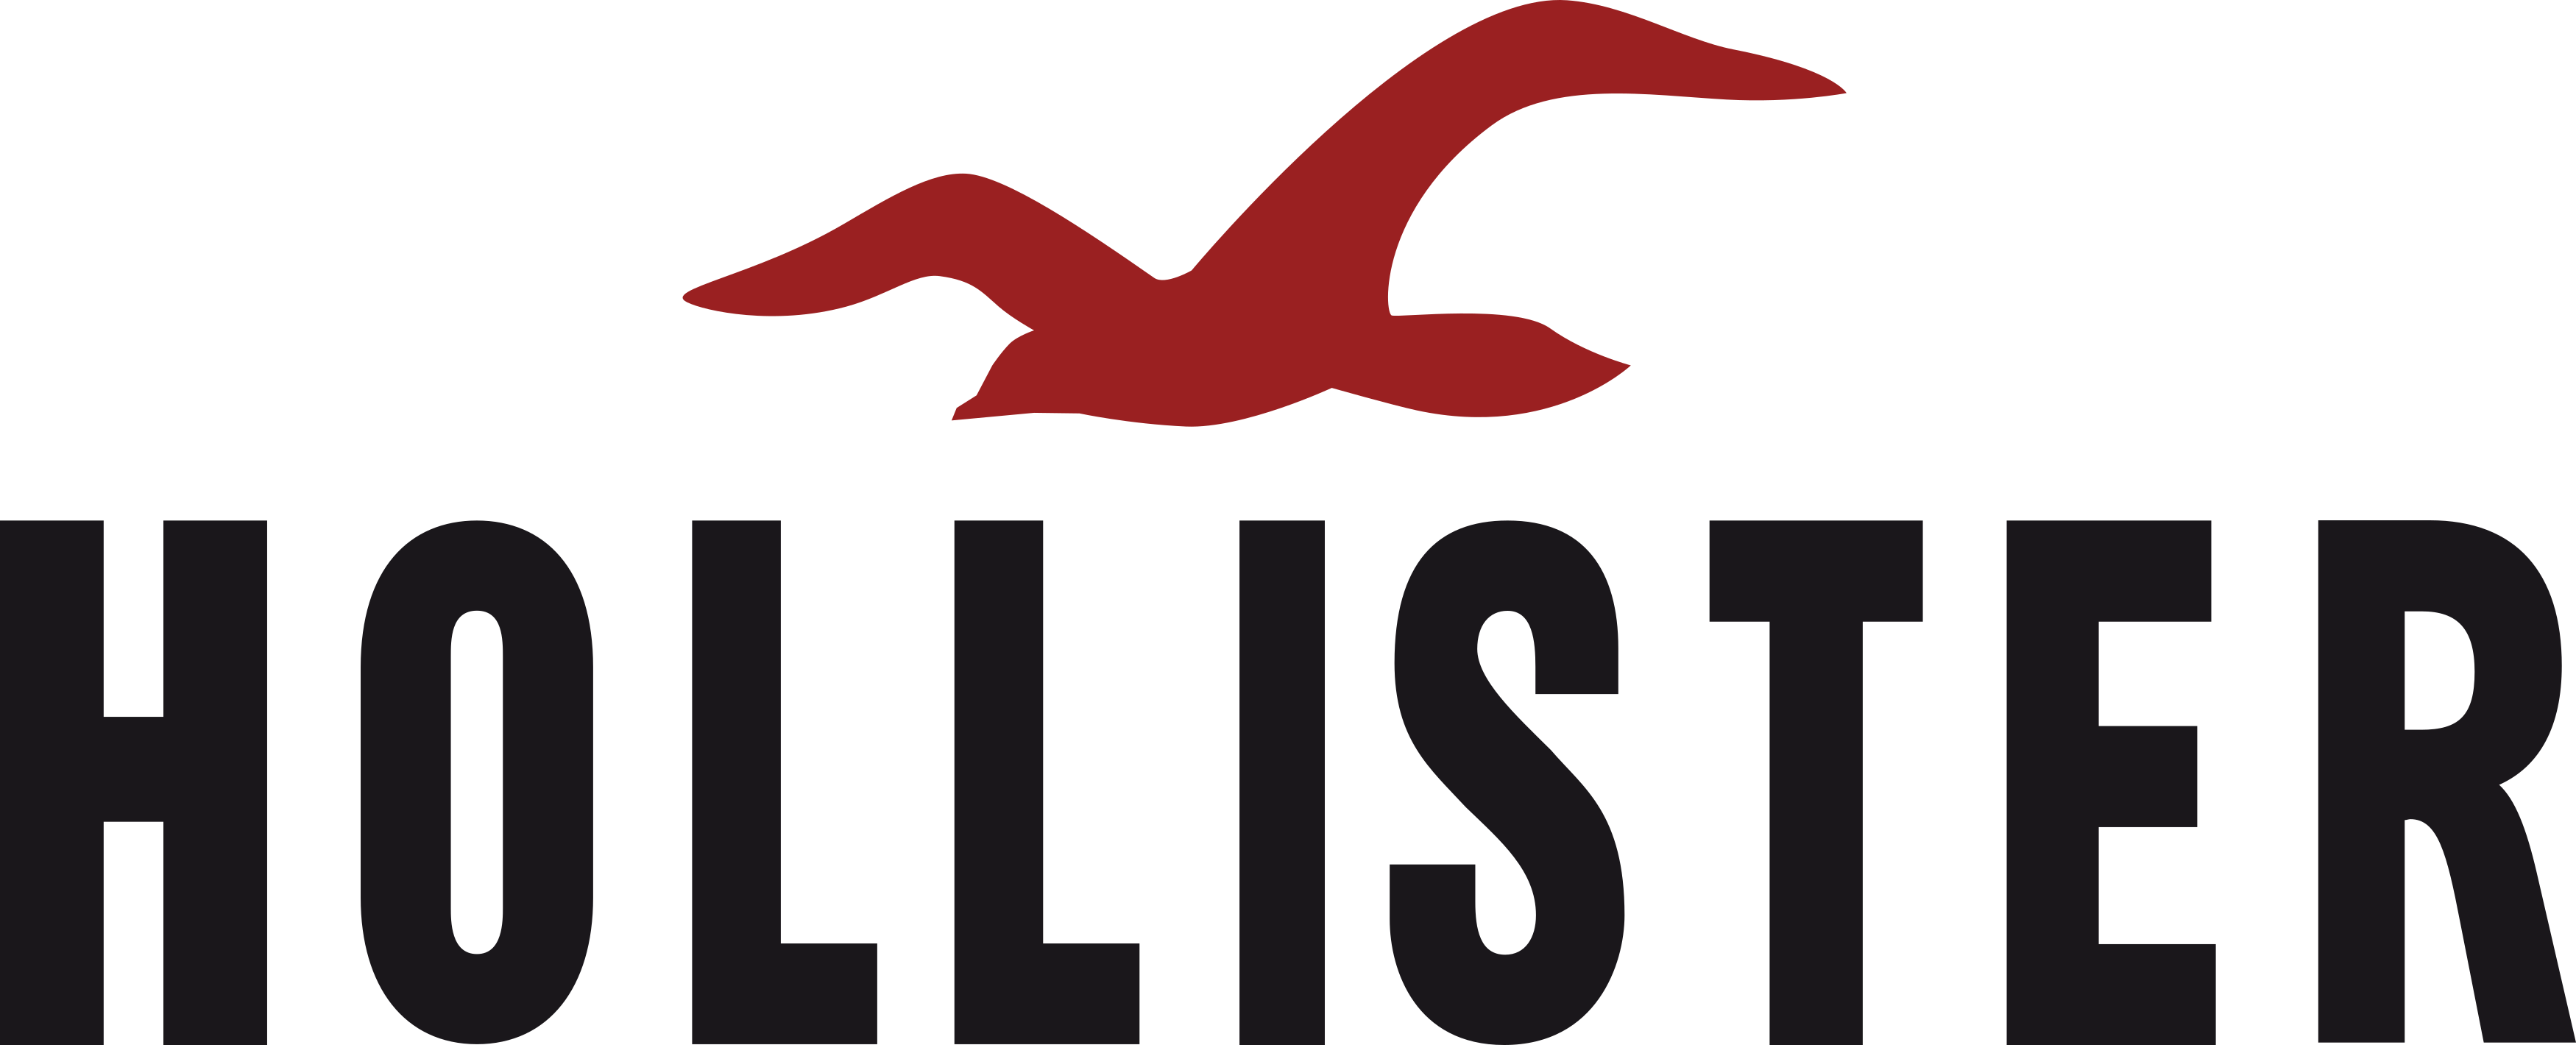 Logo de Hollister SVG